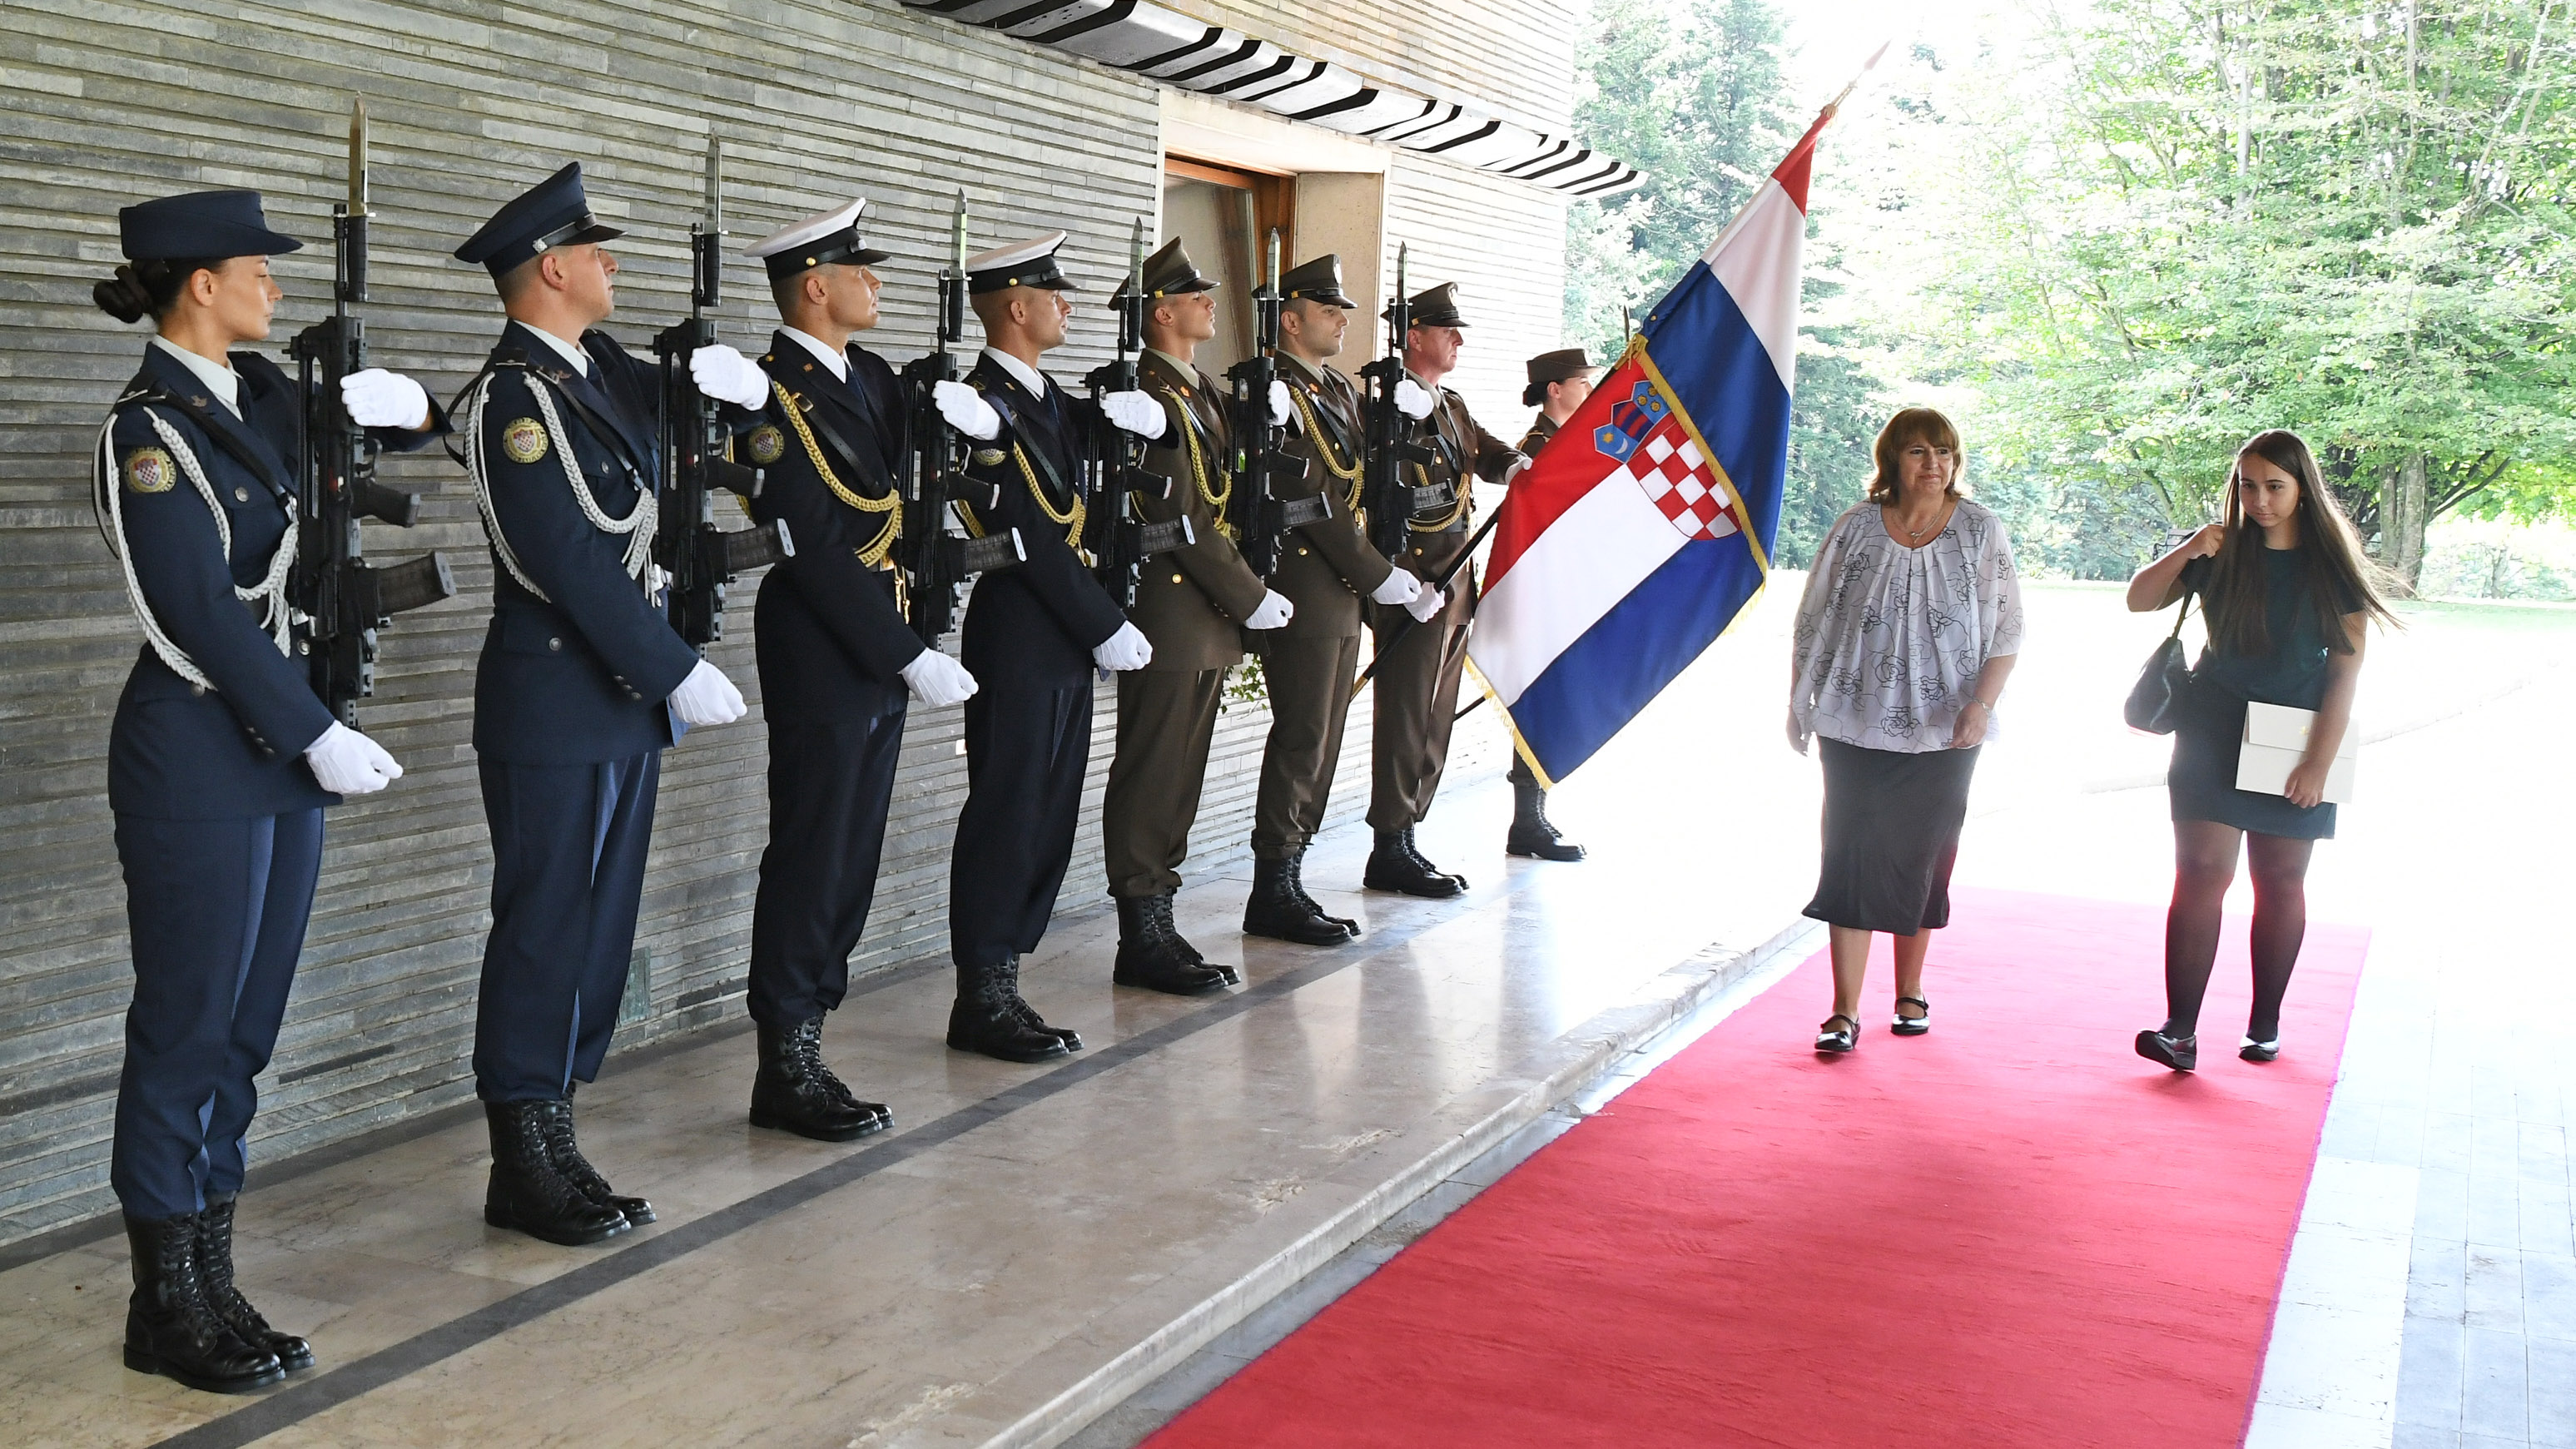 Iva Kruleva, Ambassador Extraordinary and Plenipotentiary of the Republic of Bulgaria to the Republic of Croatia presented her credentials to Croatian President Zoran Milanovic